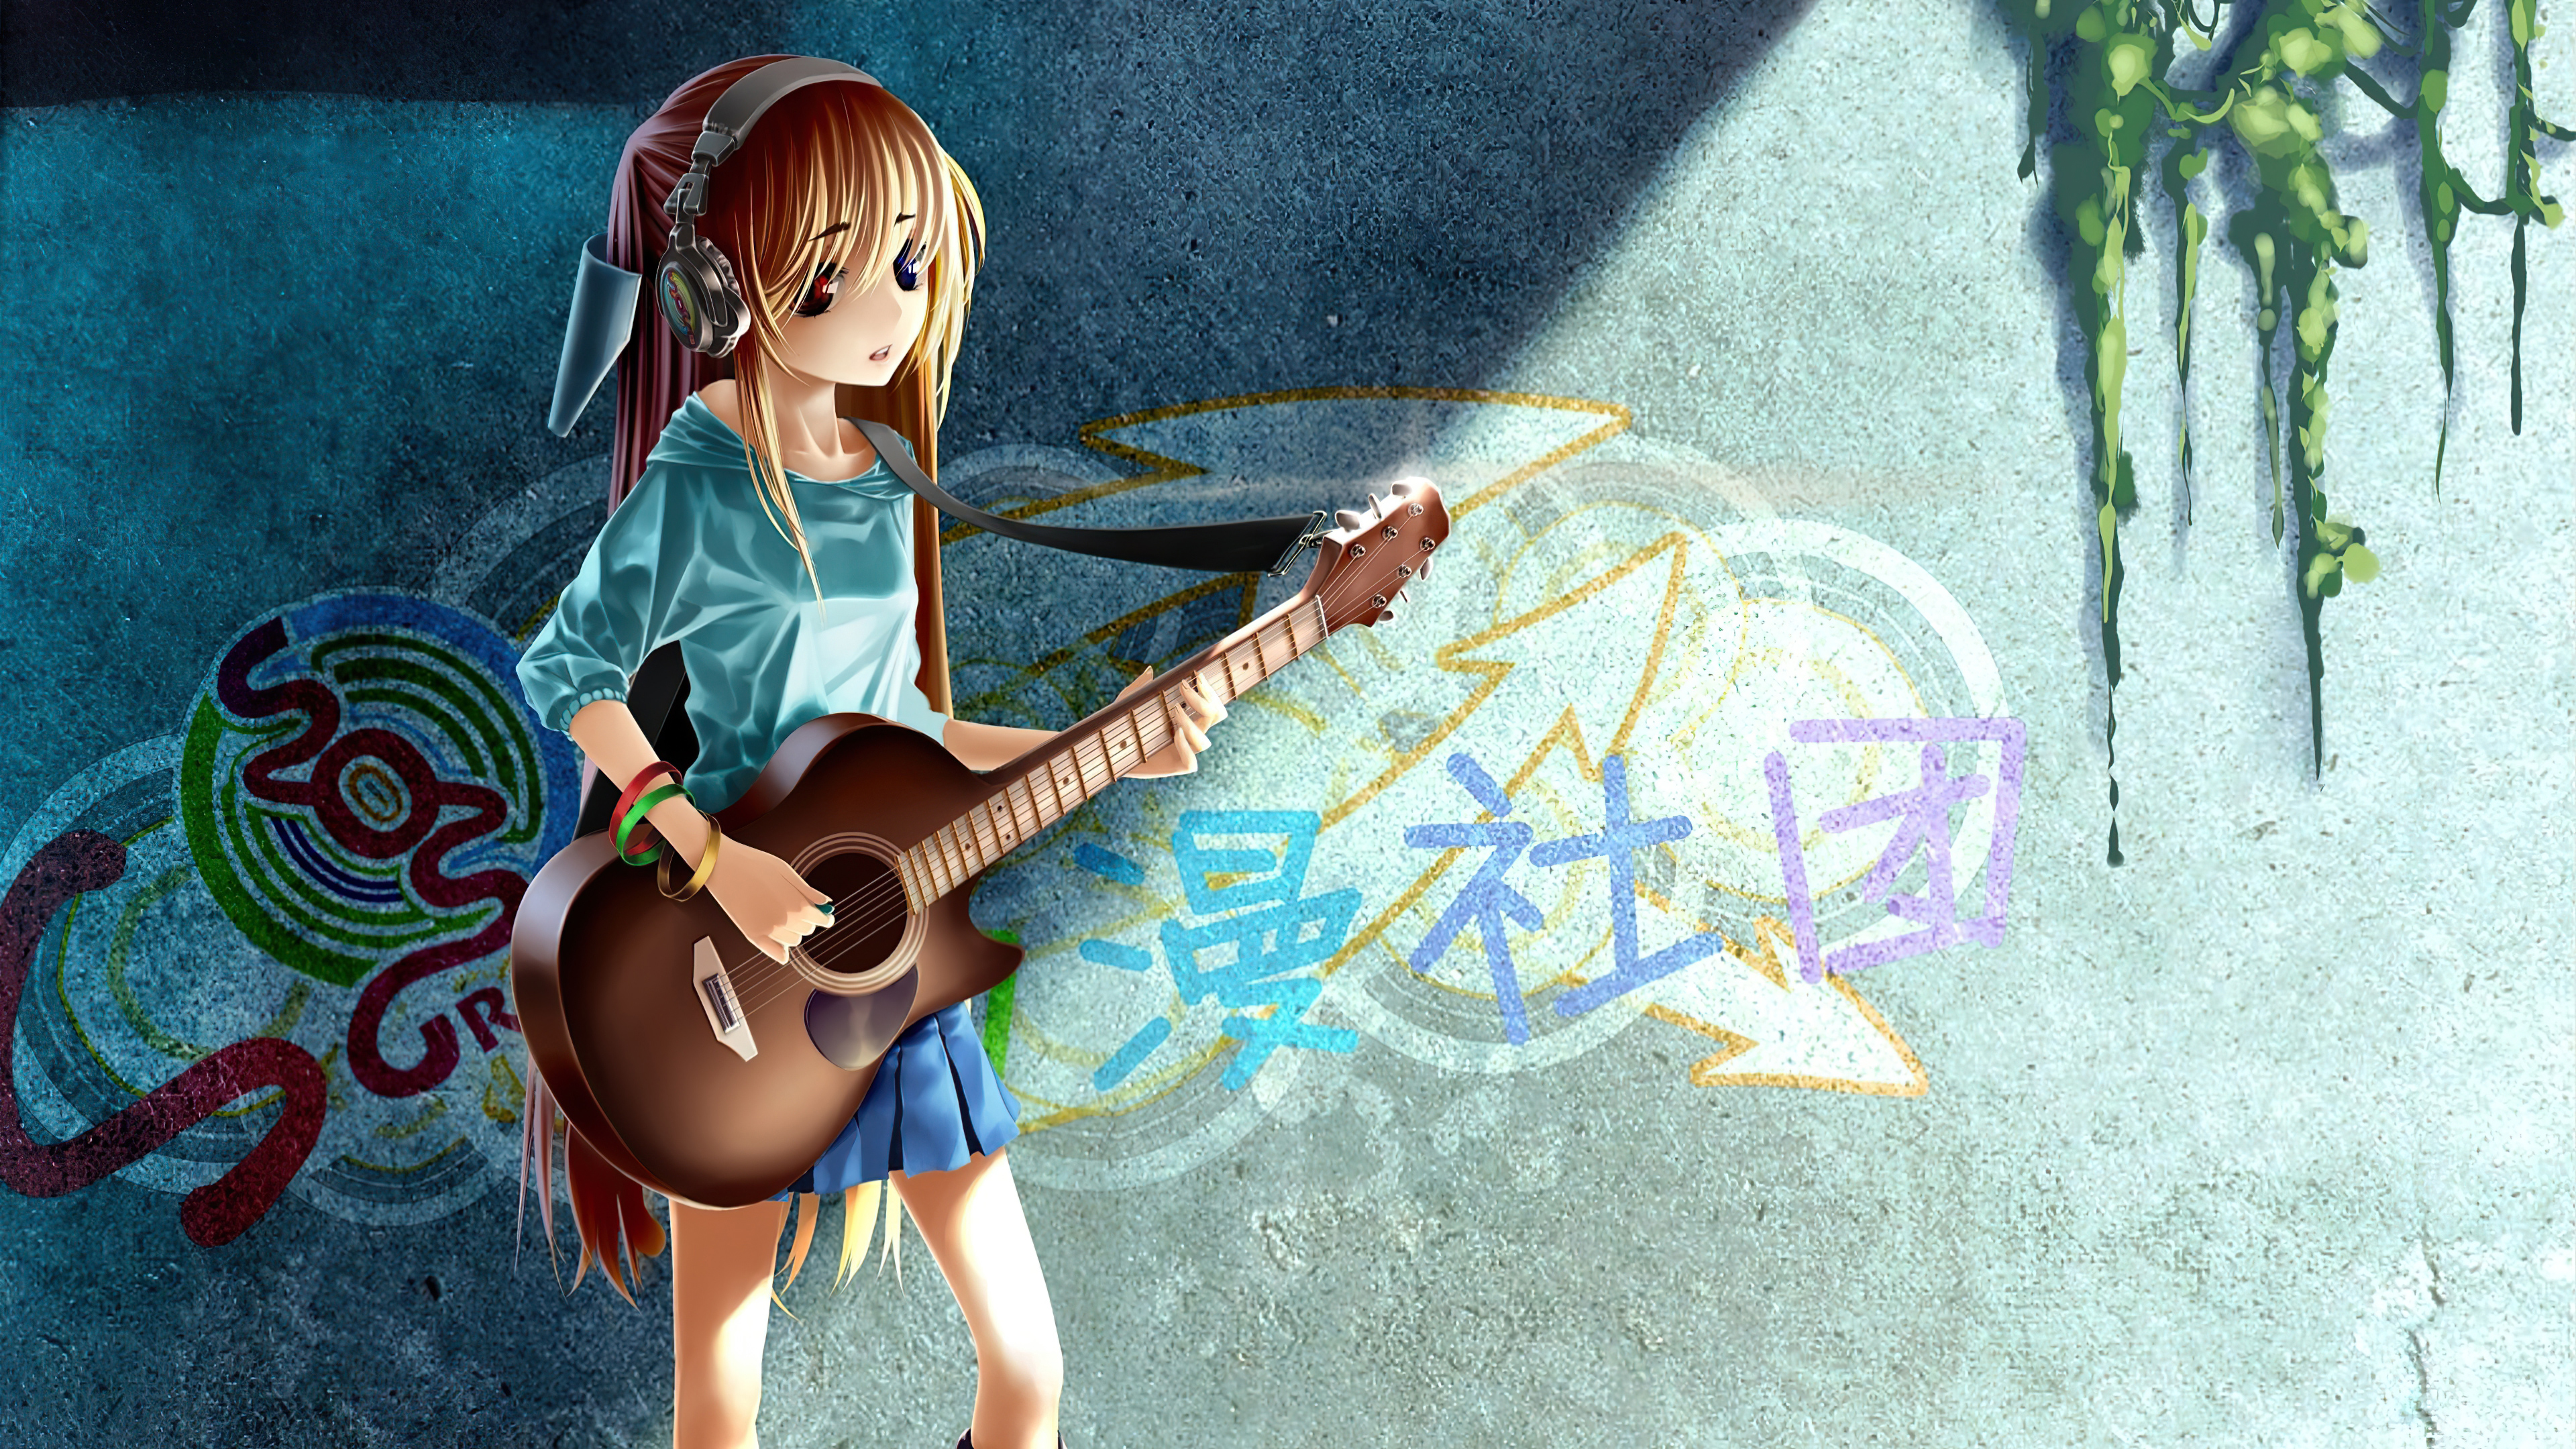 Anime Guitarist Wallpapers